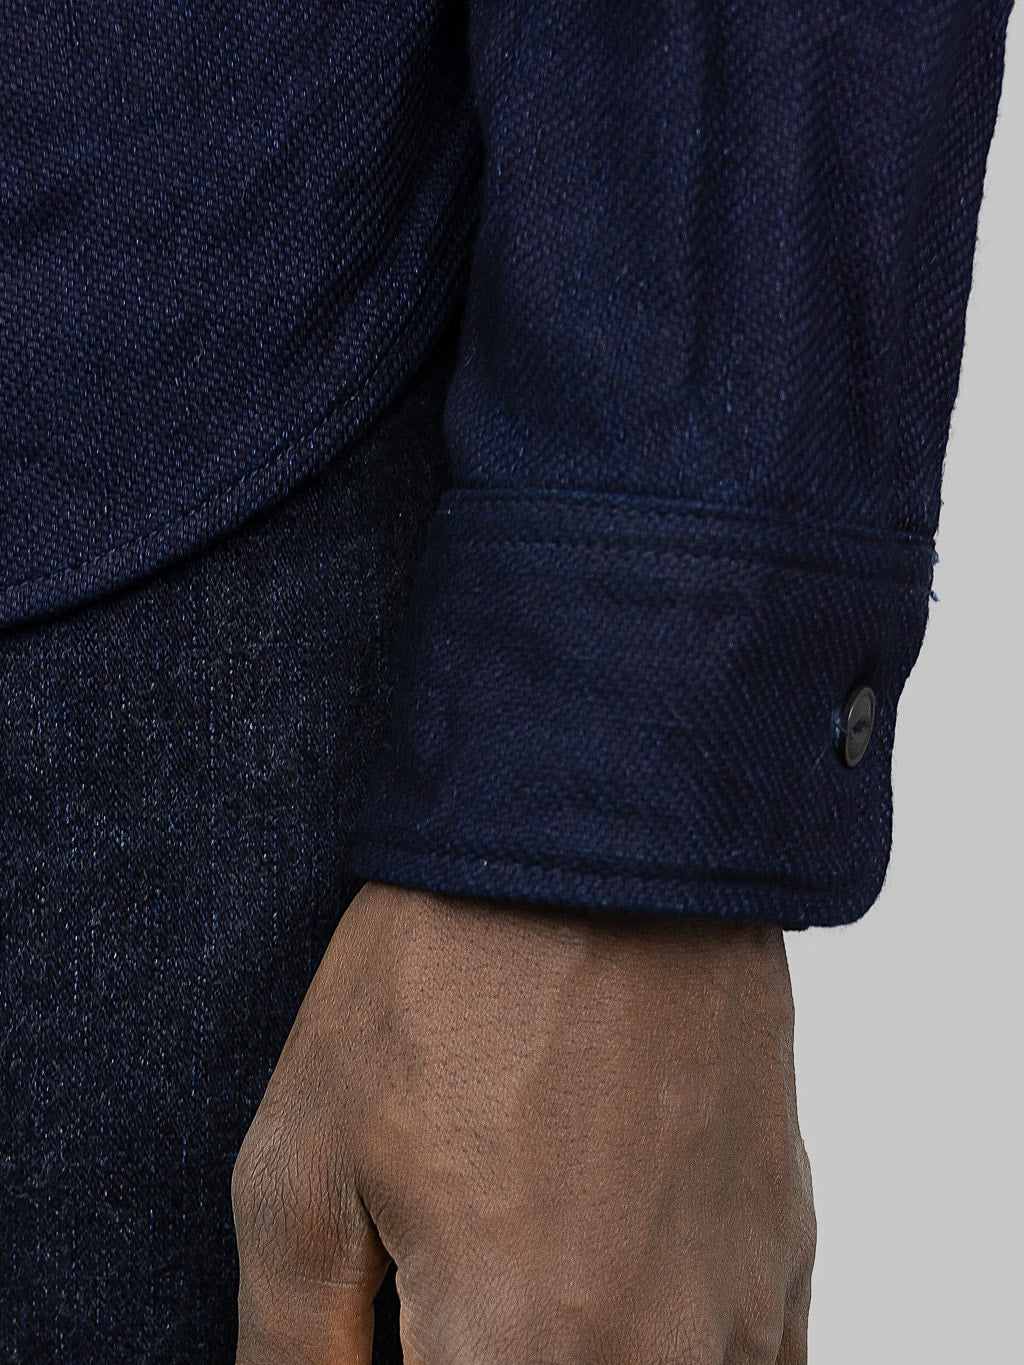 UES Indigo Heavy Selvedge Flannel Shirt cuff fabric